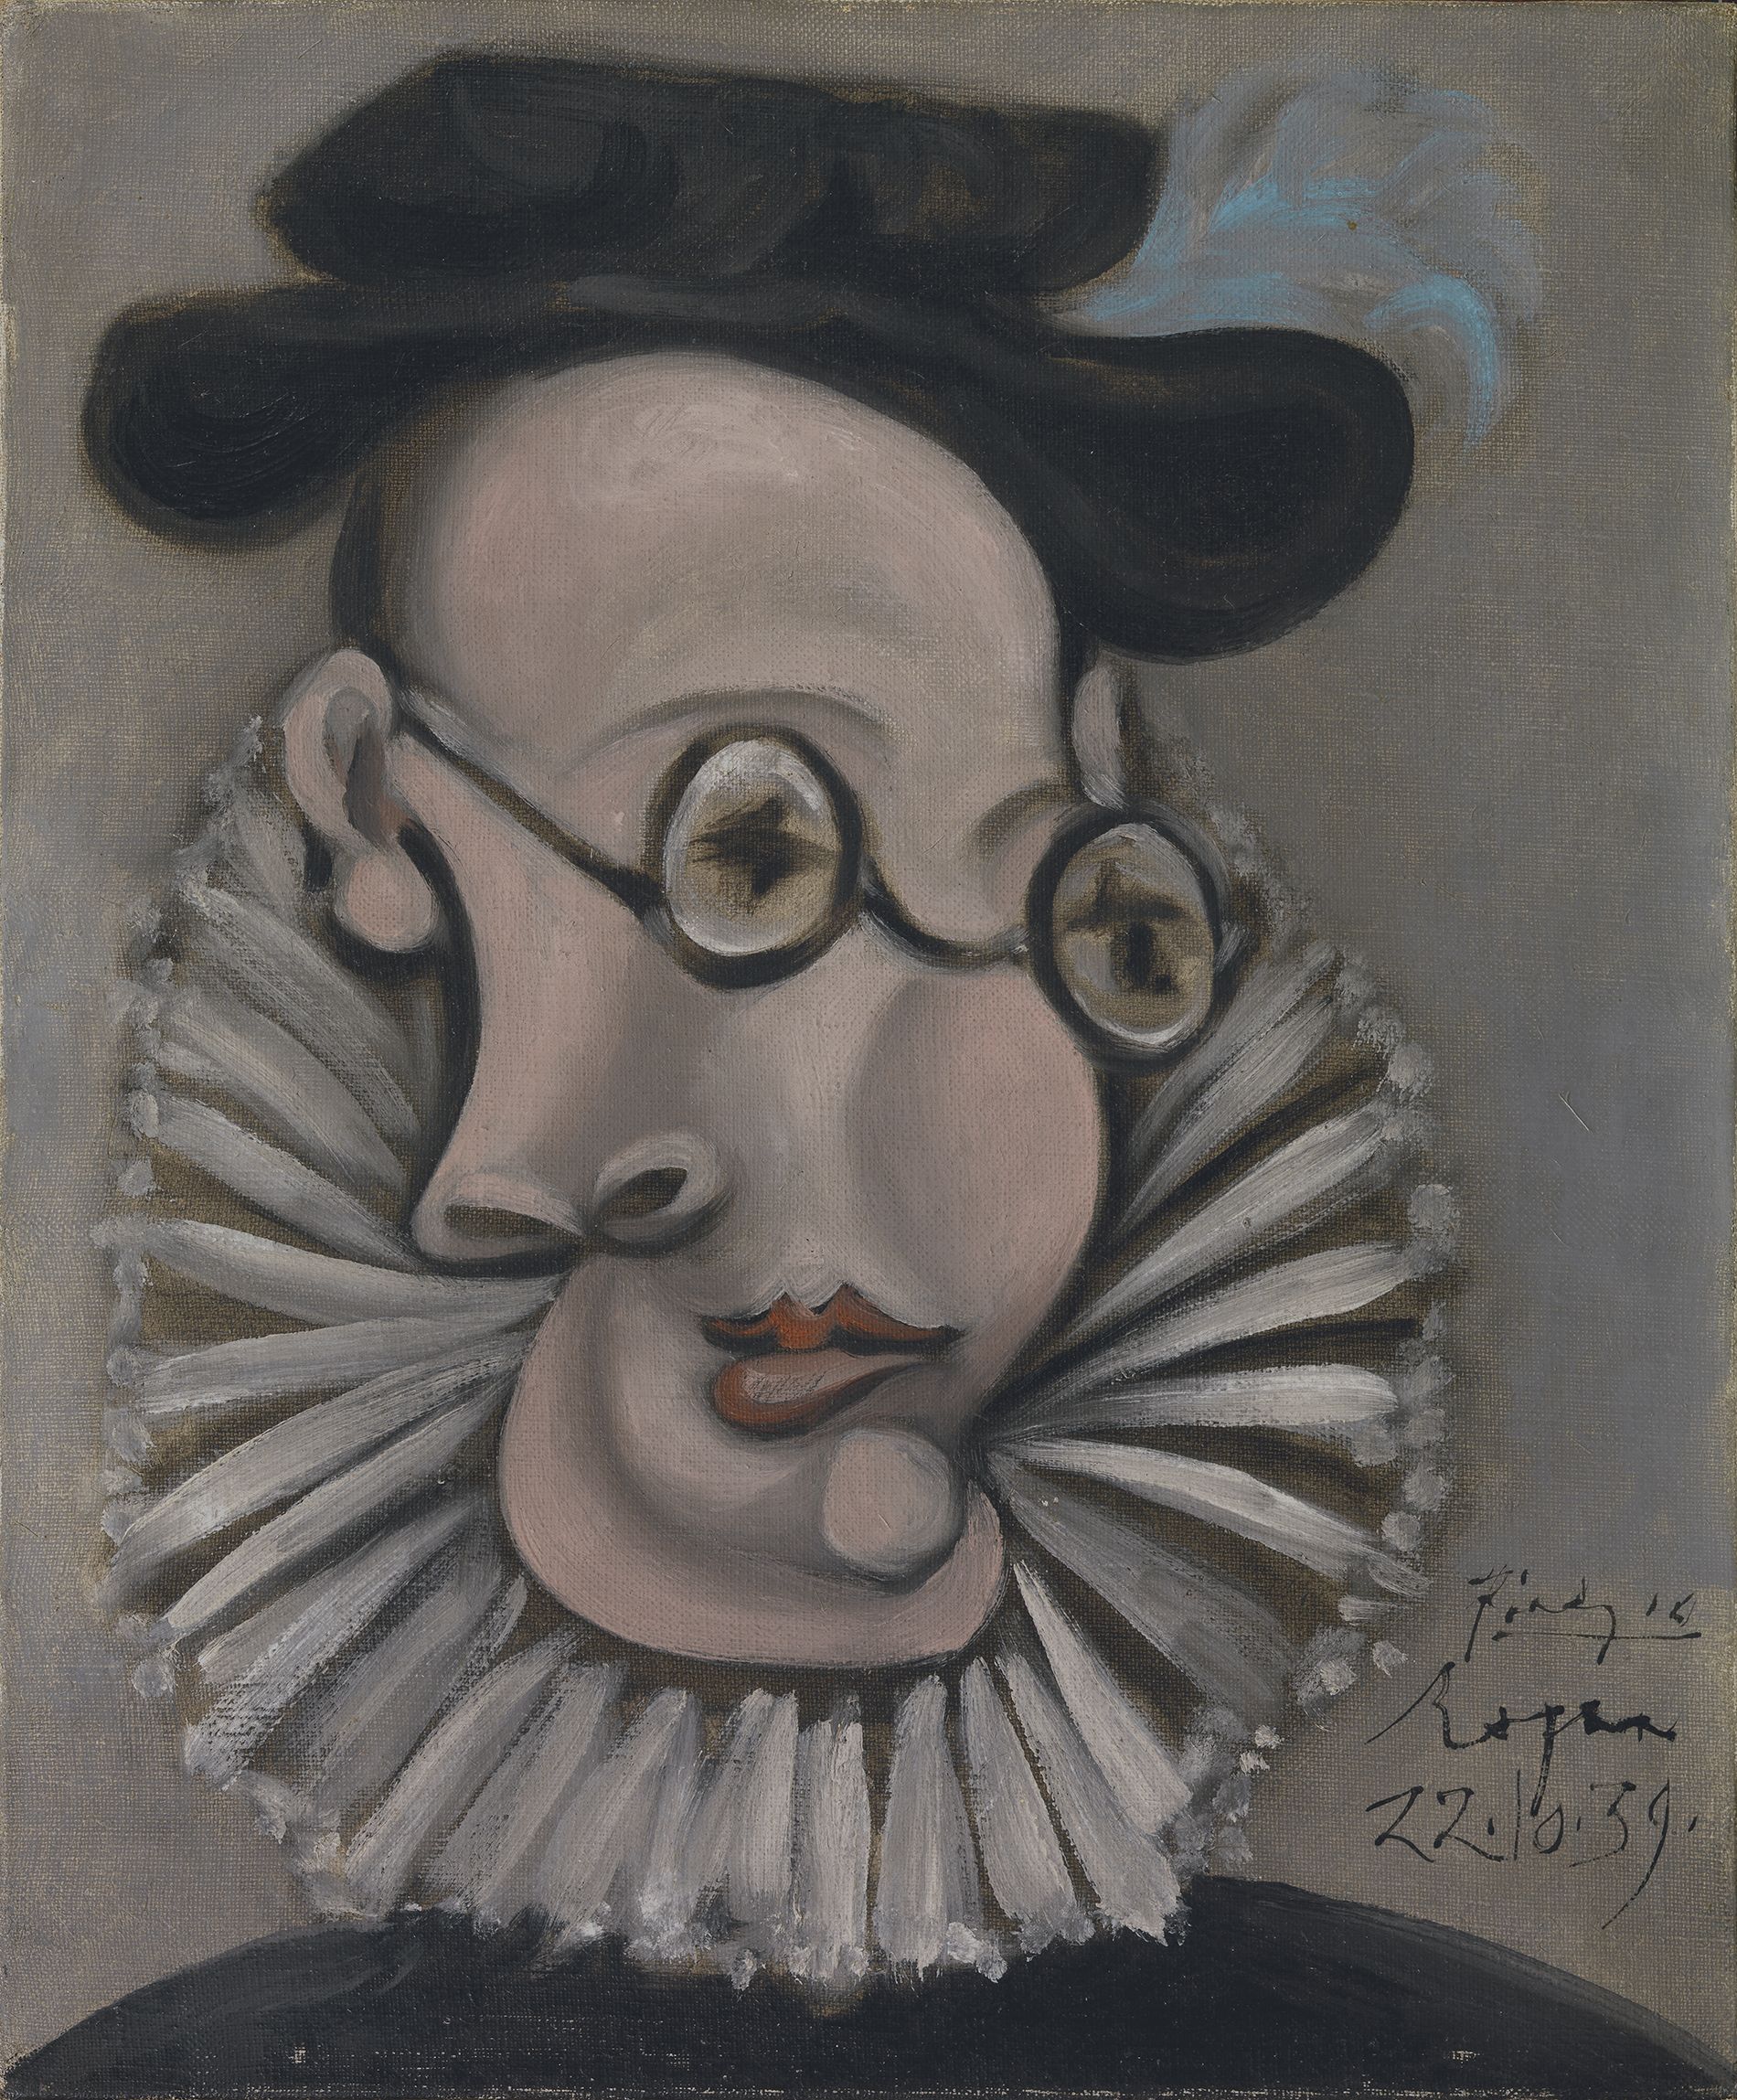 Pablo Picasso, Portrait of Jaume Sabartés with Ruff and Cap, Royan, 22 Oct.1939. Donation Jaume Sabartés, Museu Picasso, Barcelona.  Photo: Gasull Fotografia ©Succession Pablo Picasso, VEGAP, Madrid 2018